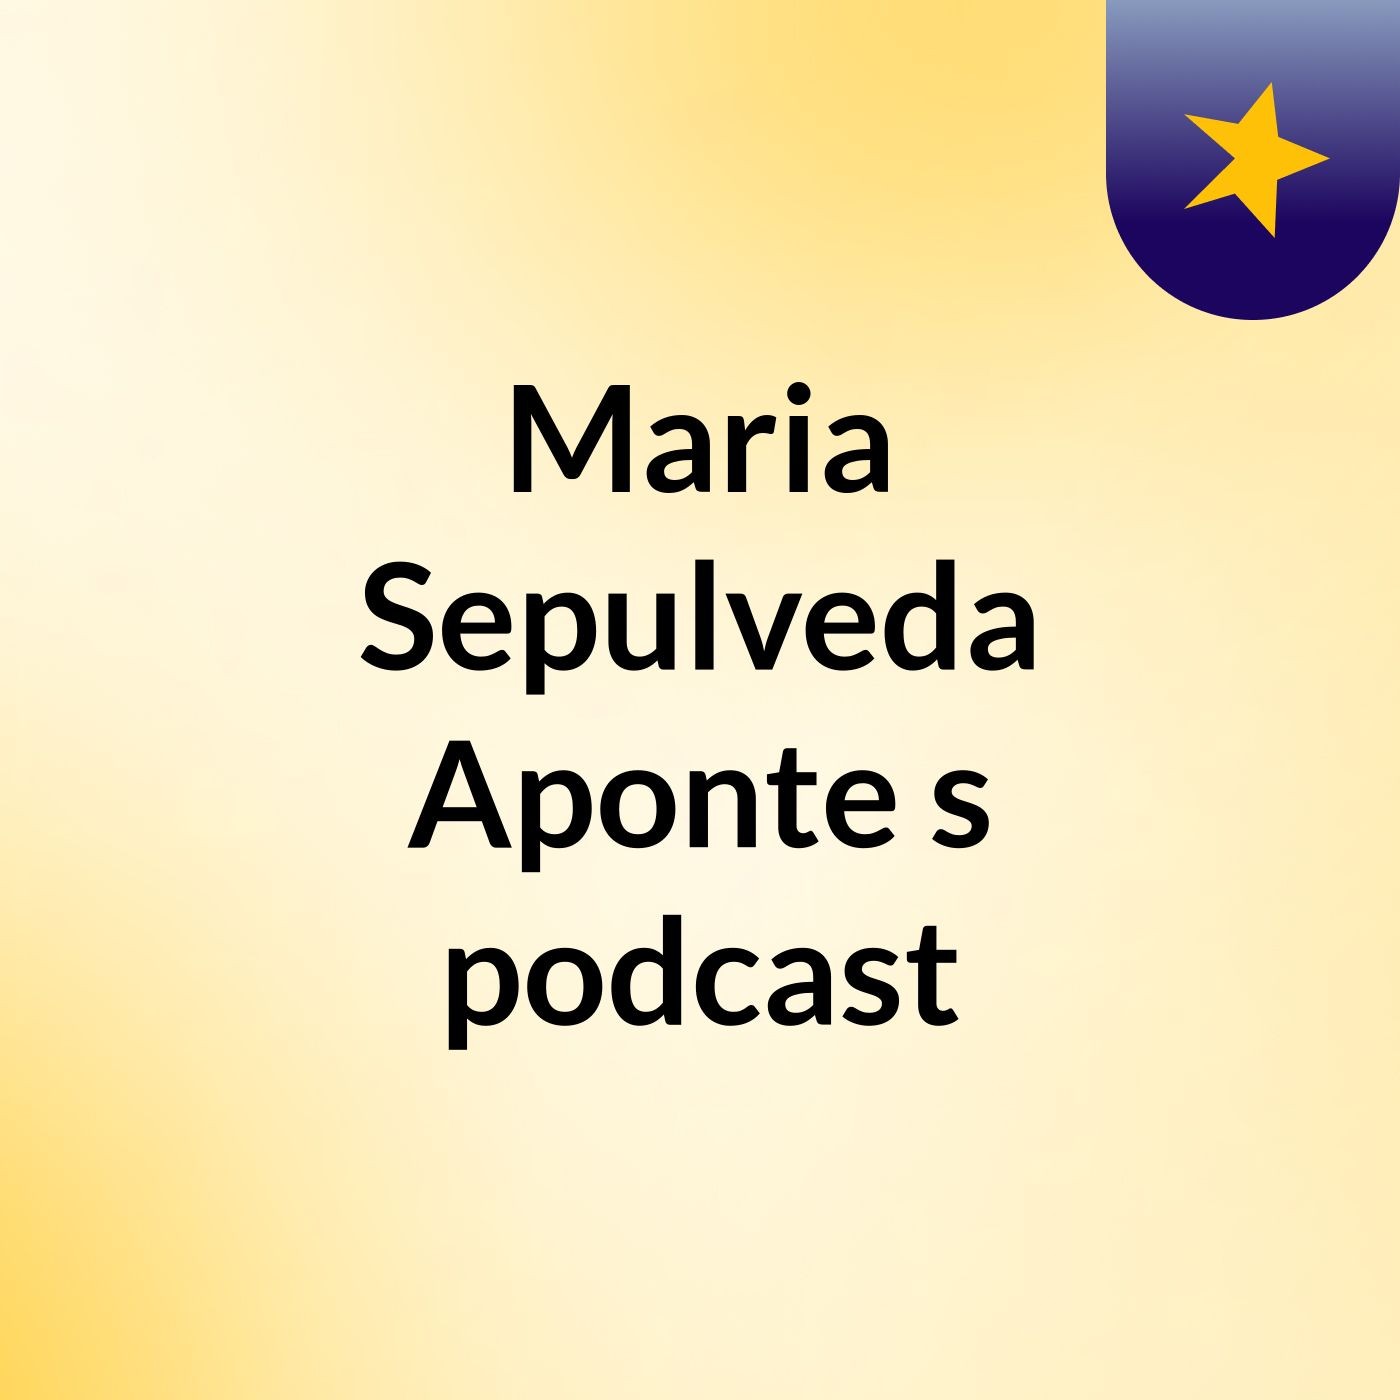 Maria Sepulveda Aponte's podcast